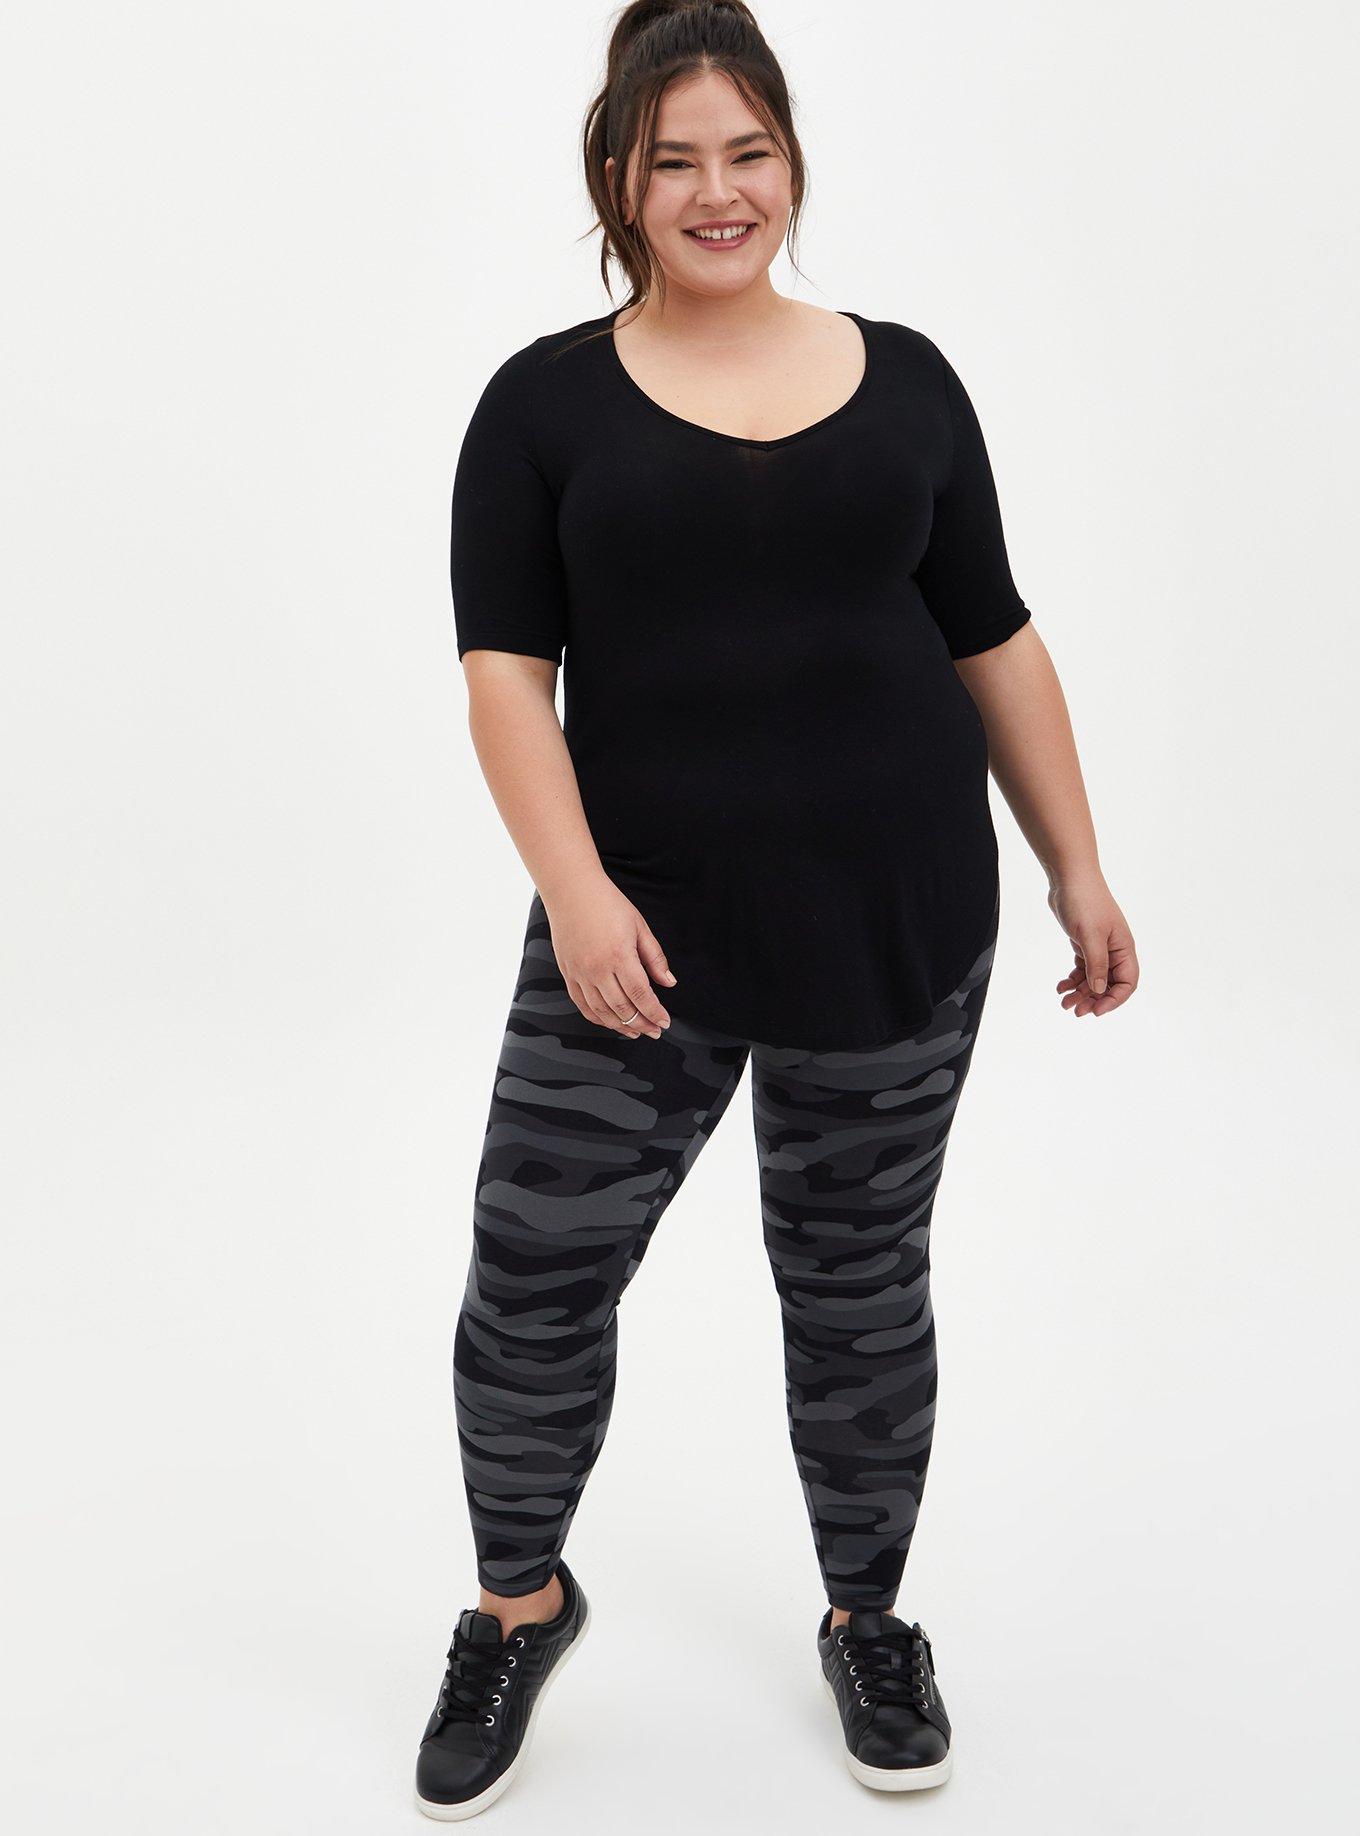 Nike Dri-fit One Plus Size Mid-Rise Camo-Print Leggings Black Size 1X MSRP  $70